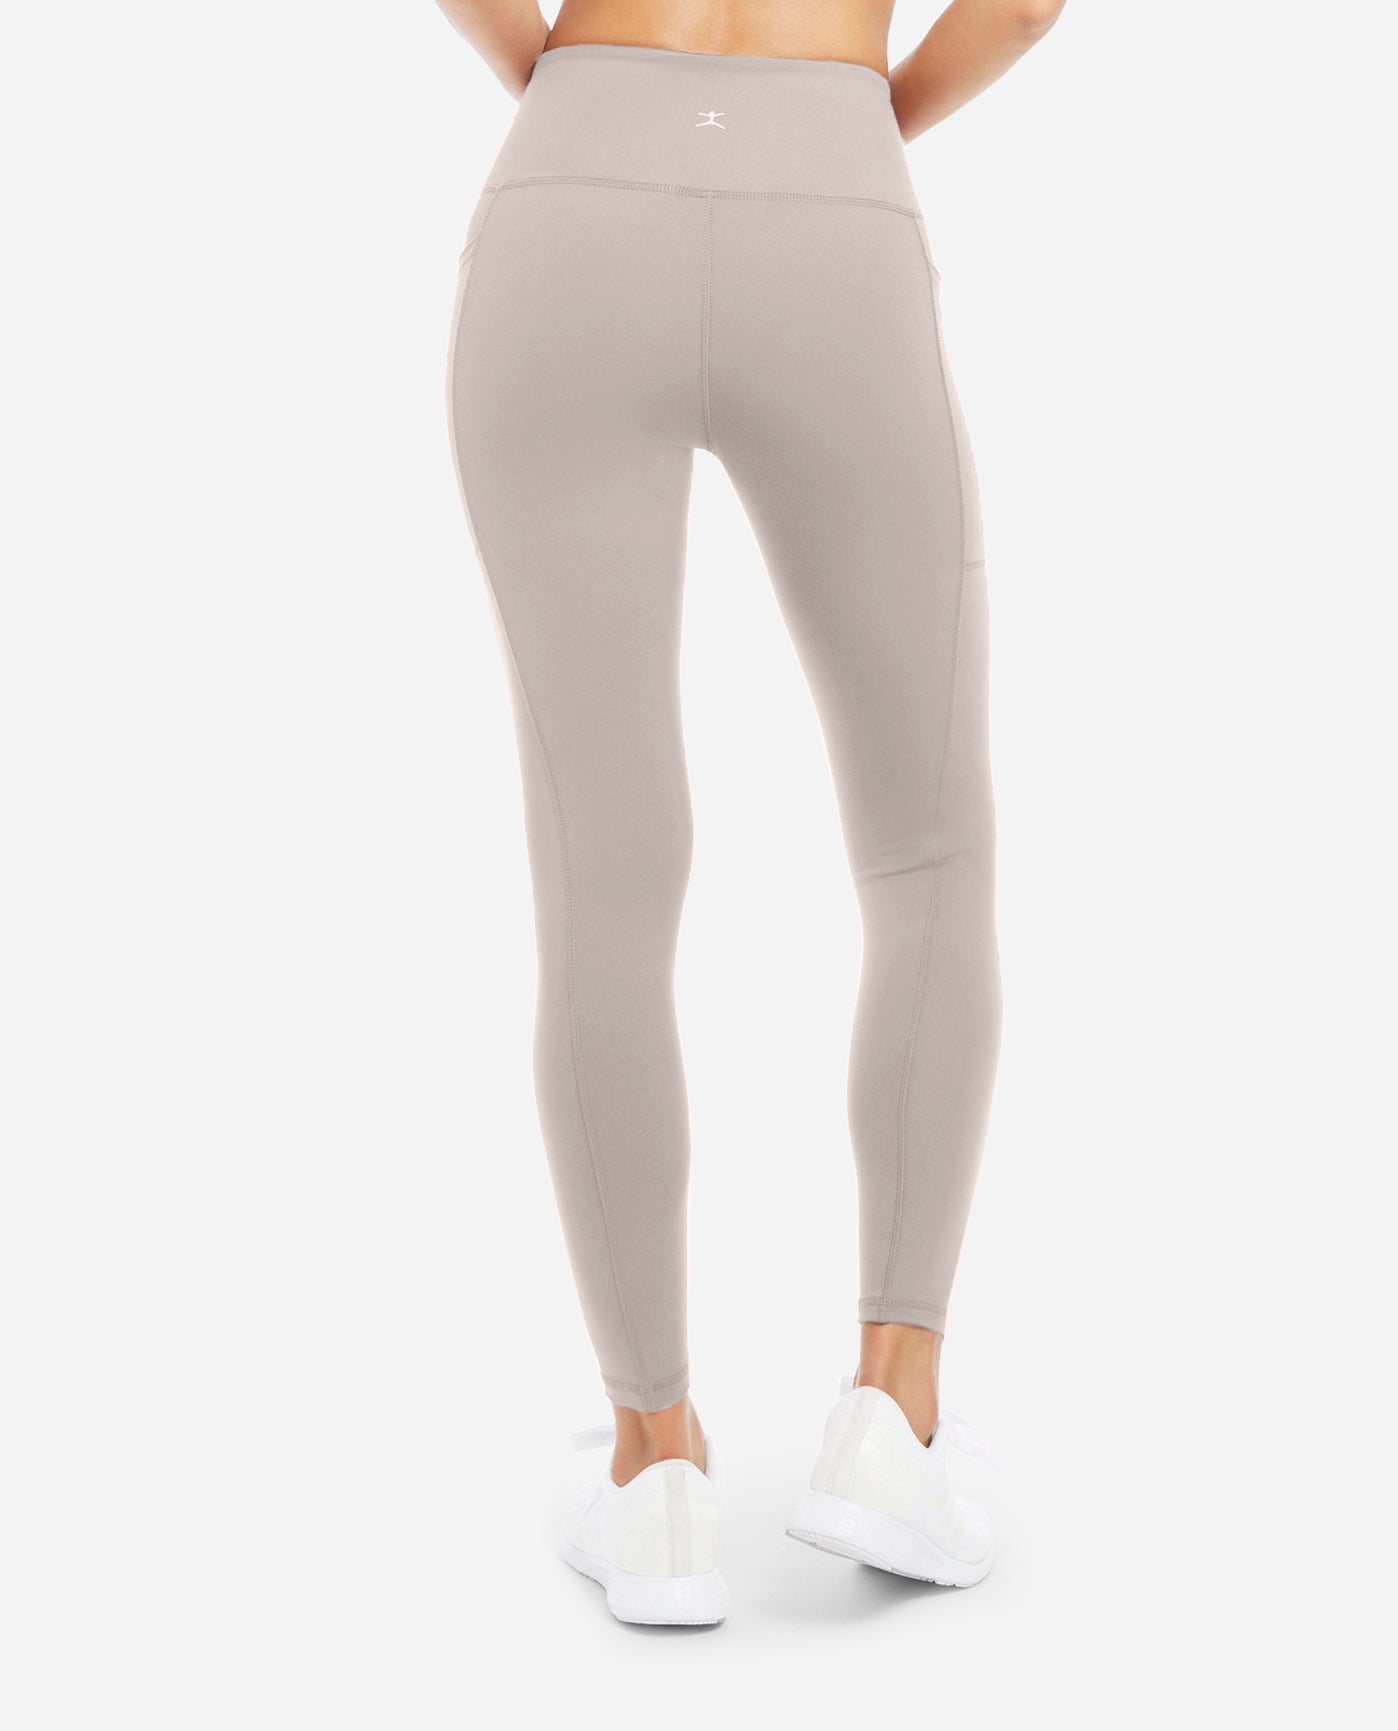 Danskin Womens Soft Brushed Fabric Ultra High Rise Leggings, Sizes/Colors,  NEW 